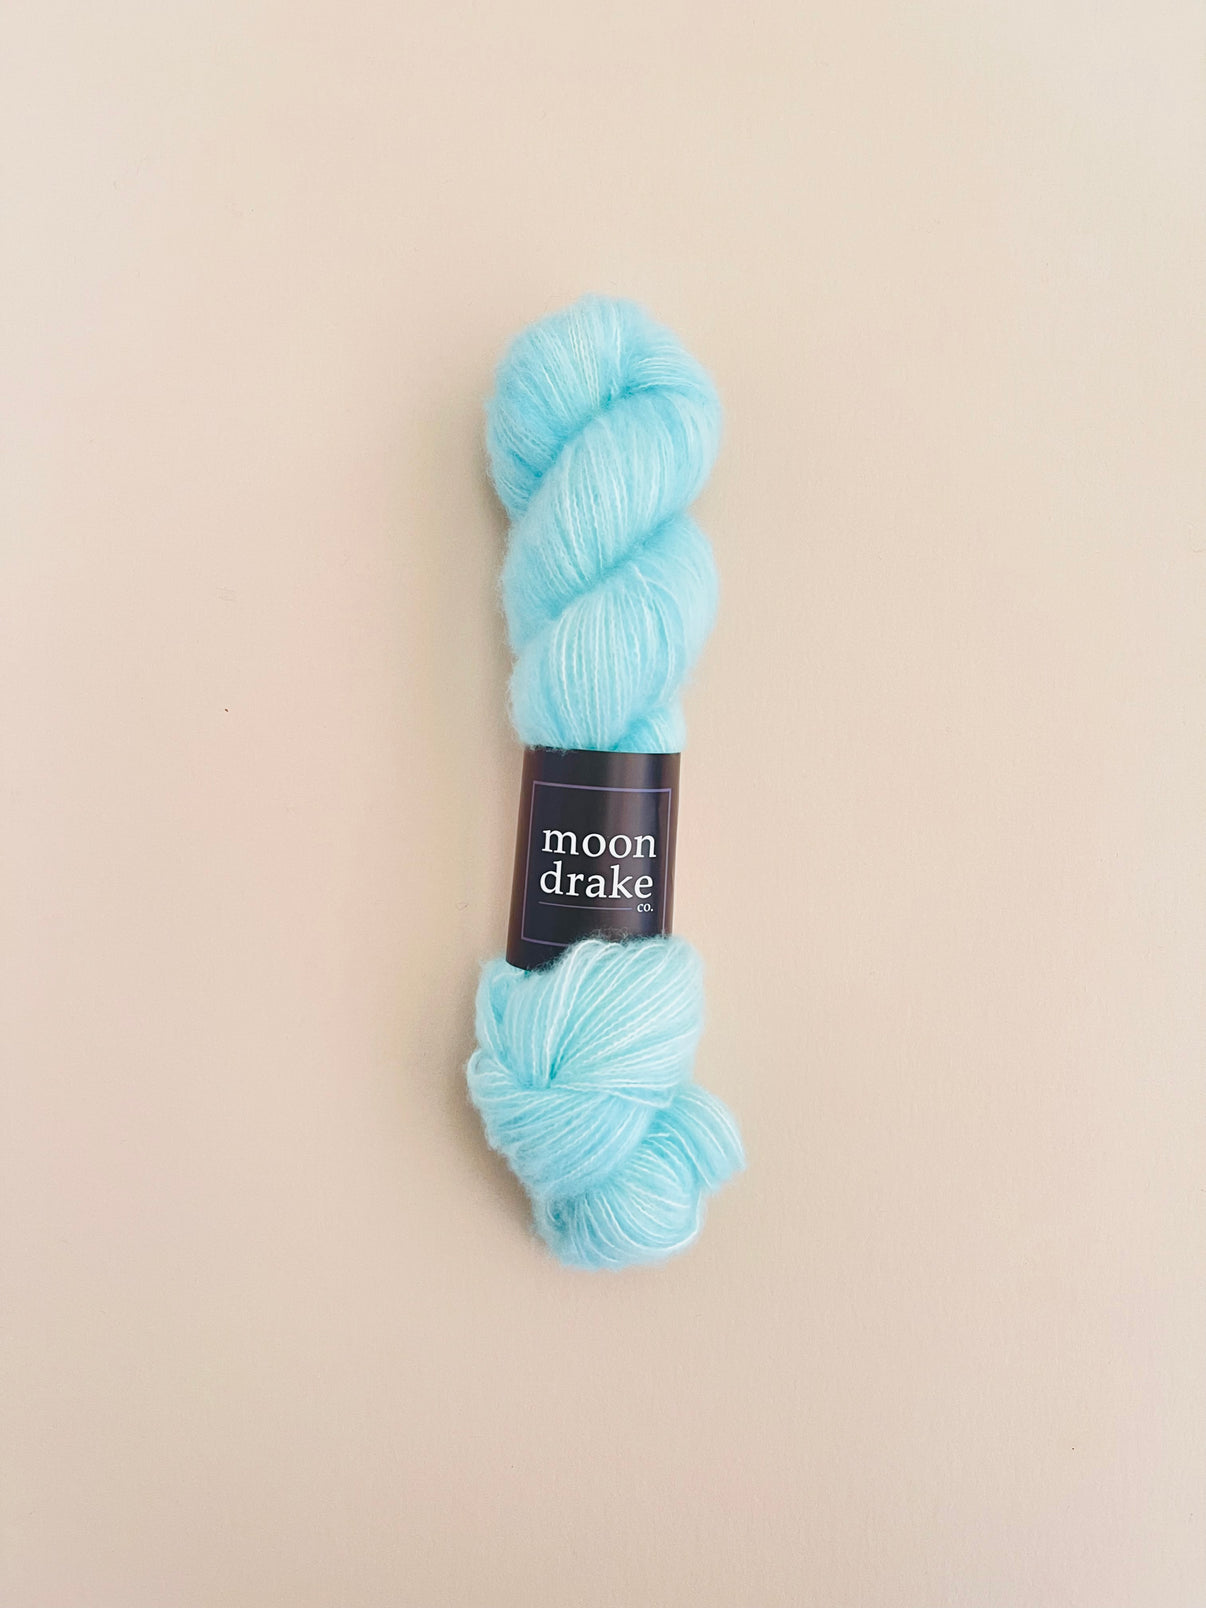 A robin's egg blue skein of fuzzy yarn.